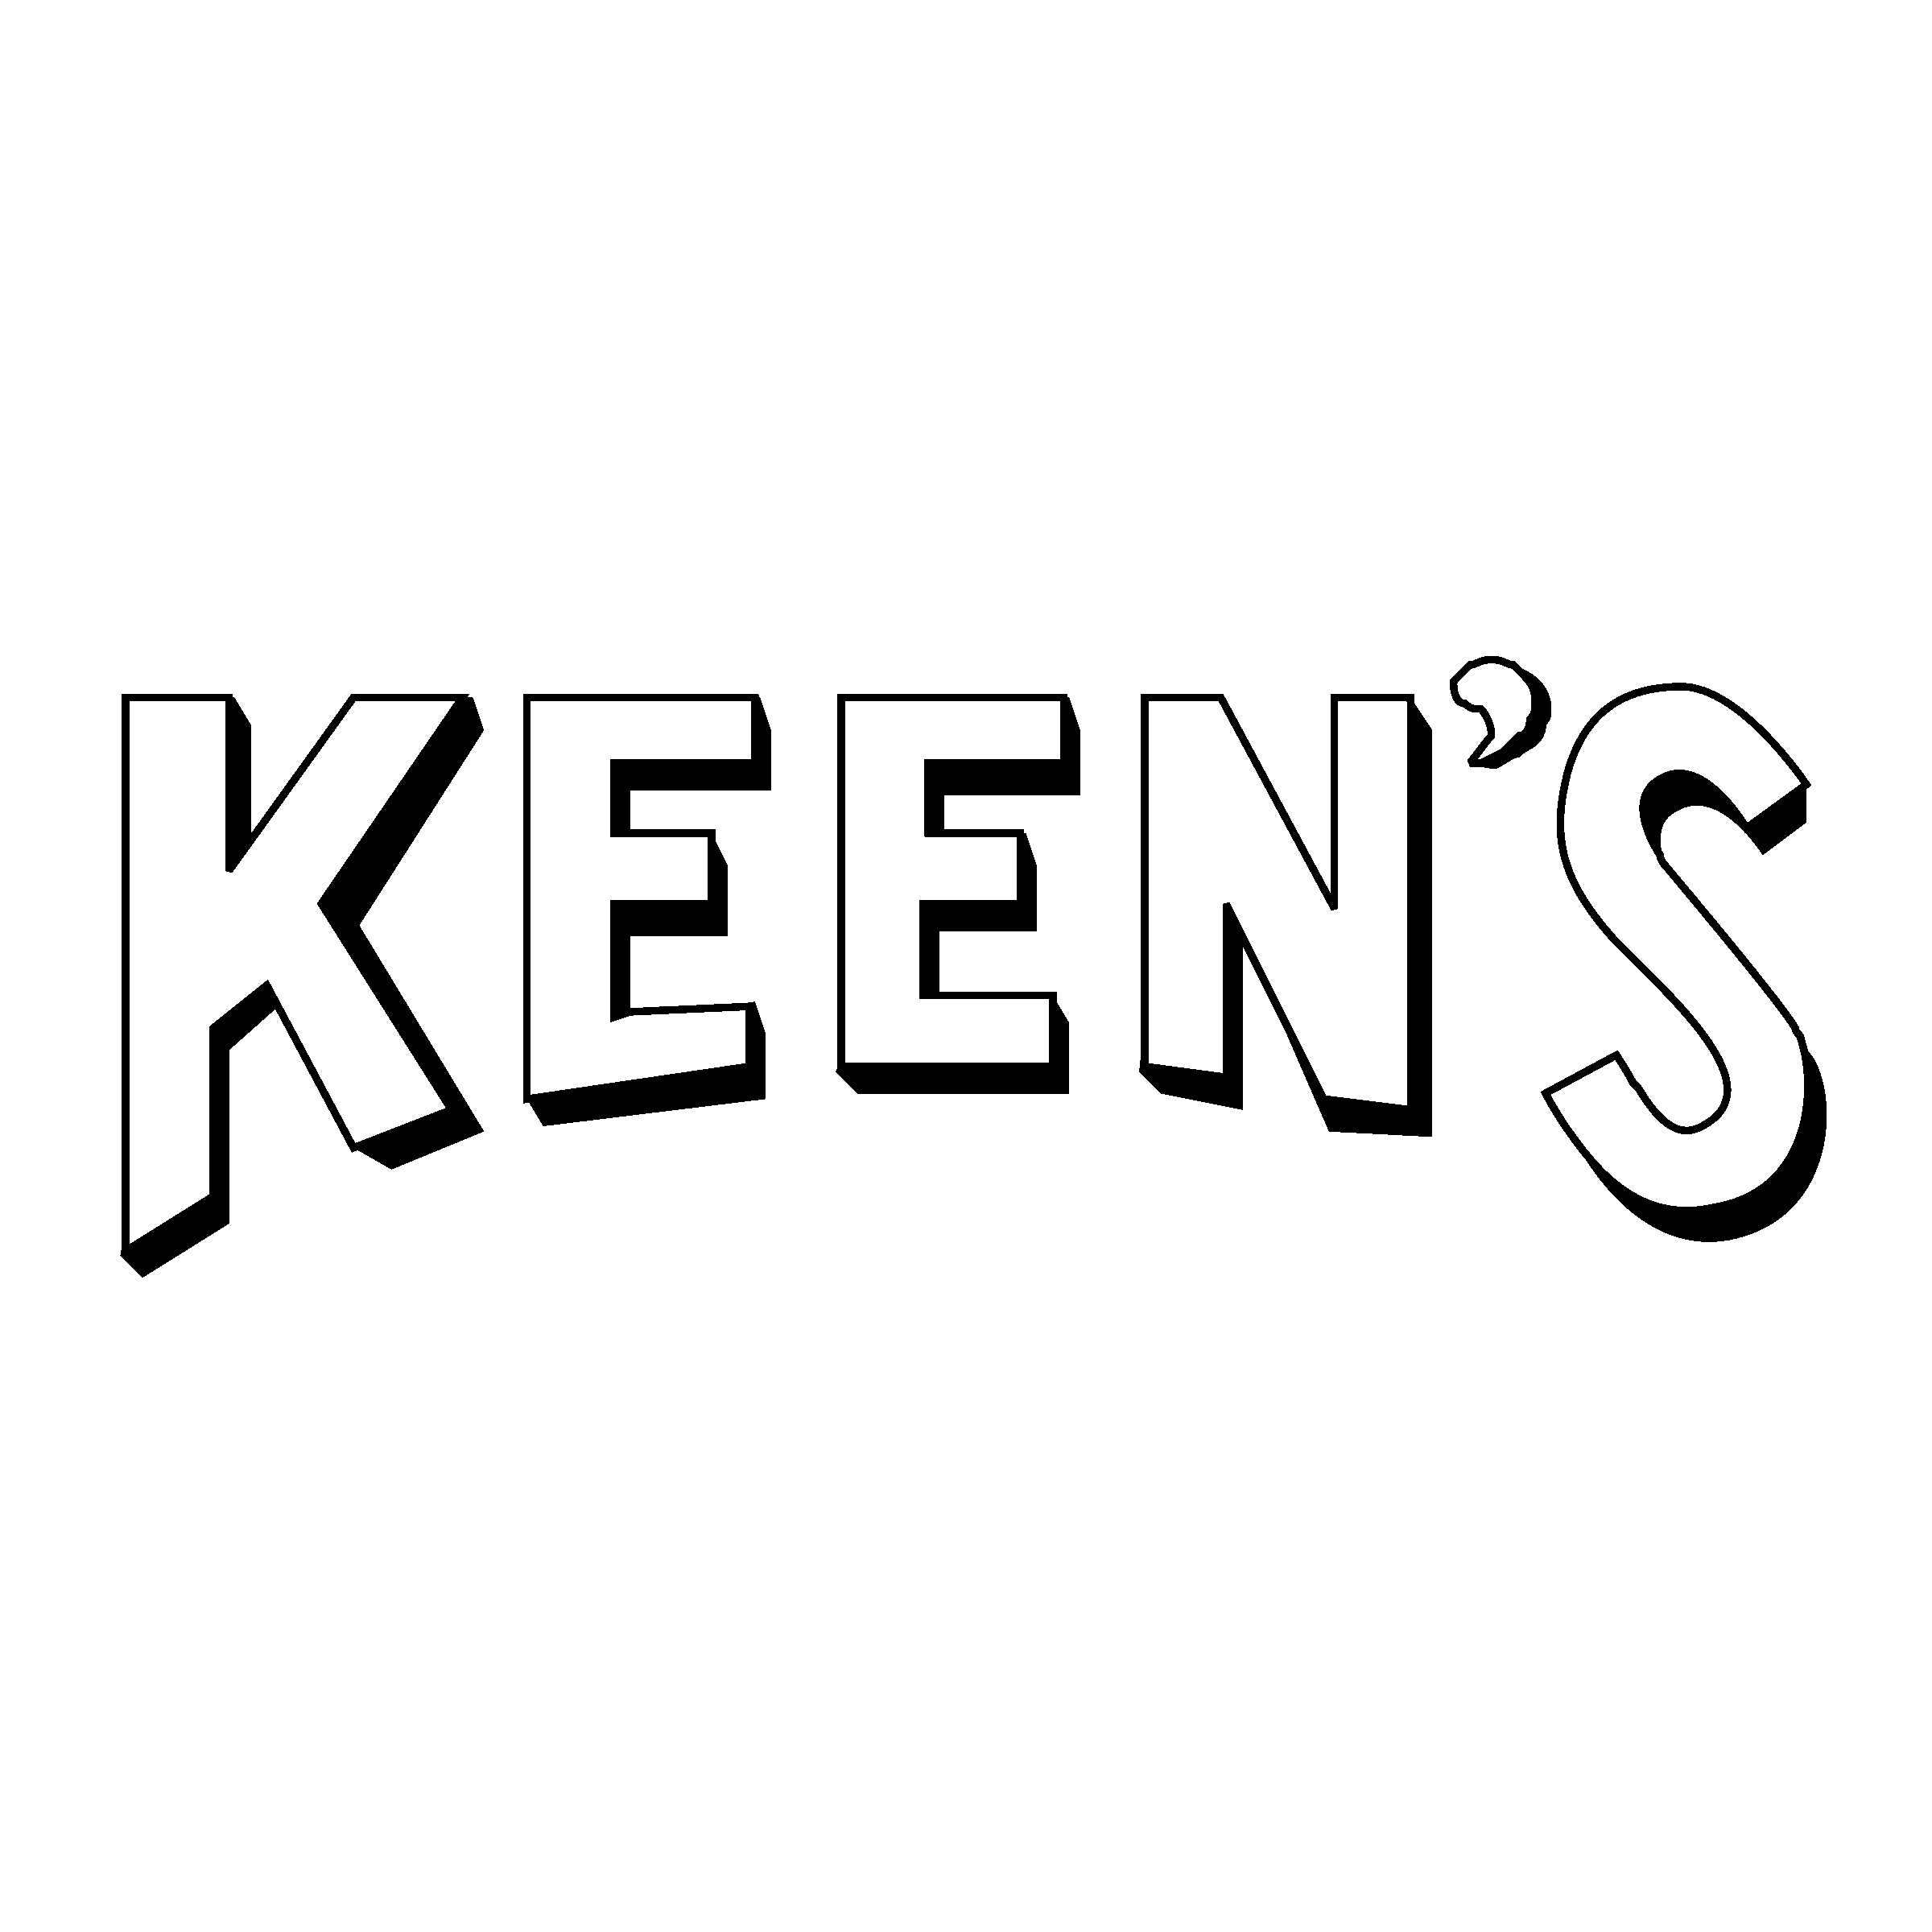 Keen.com Logo - Keen's Logo PNG Transparent & SVG Vector - Freebie Supply